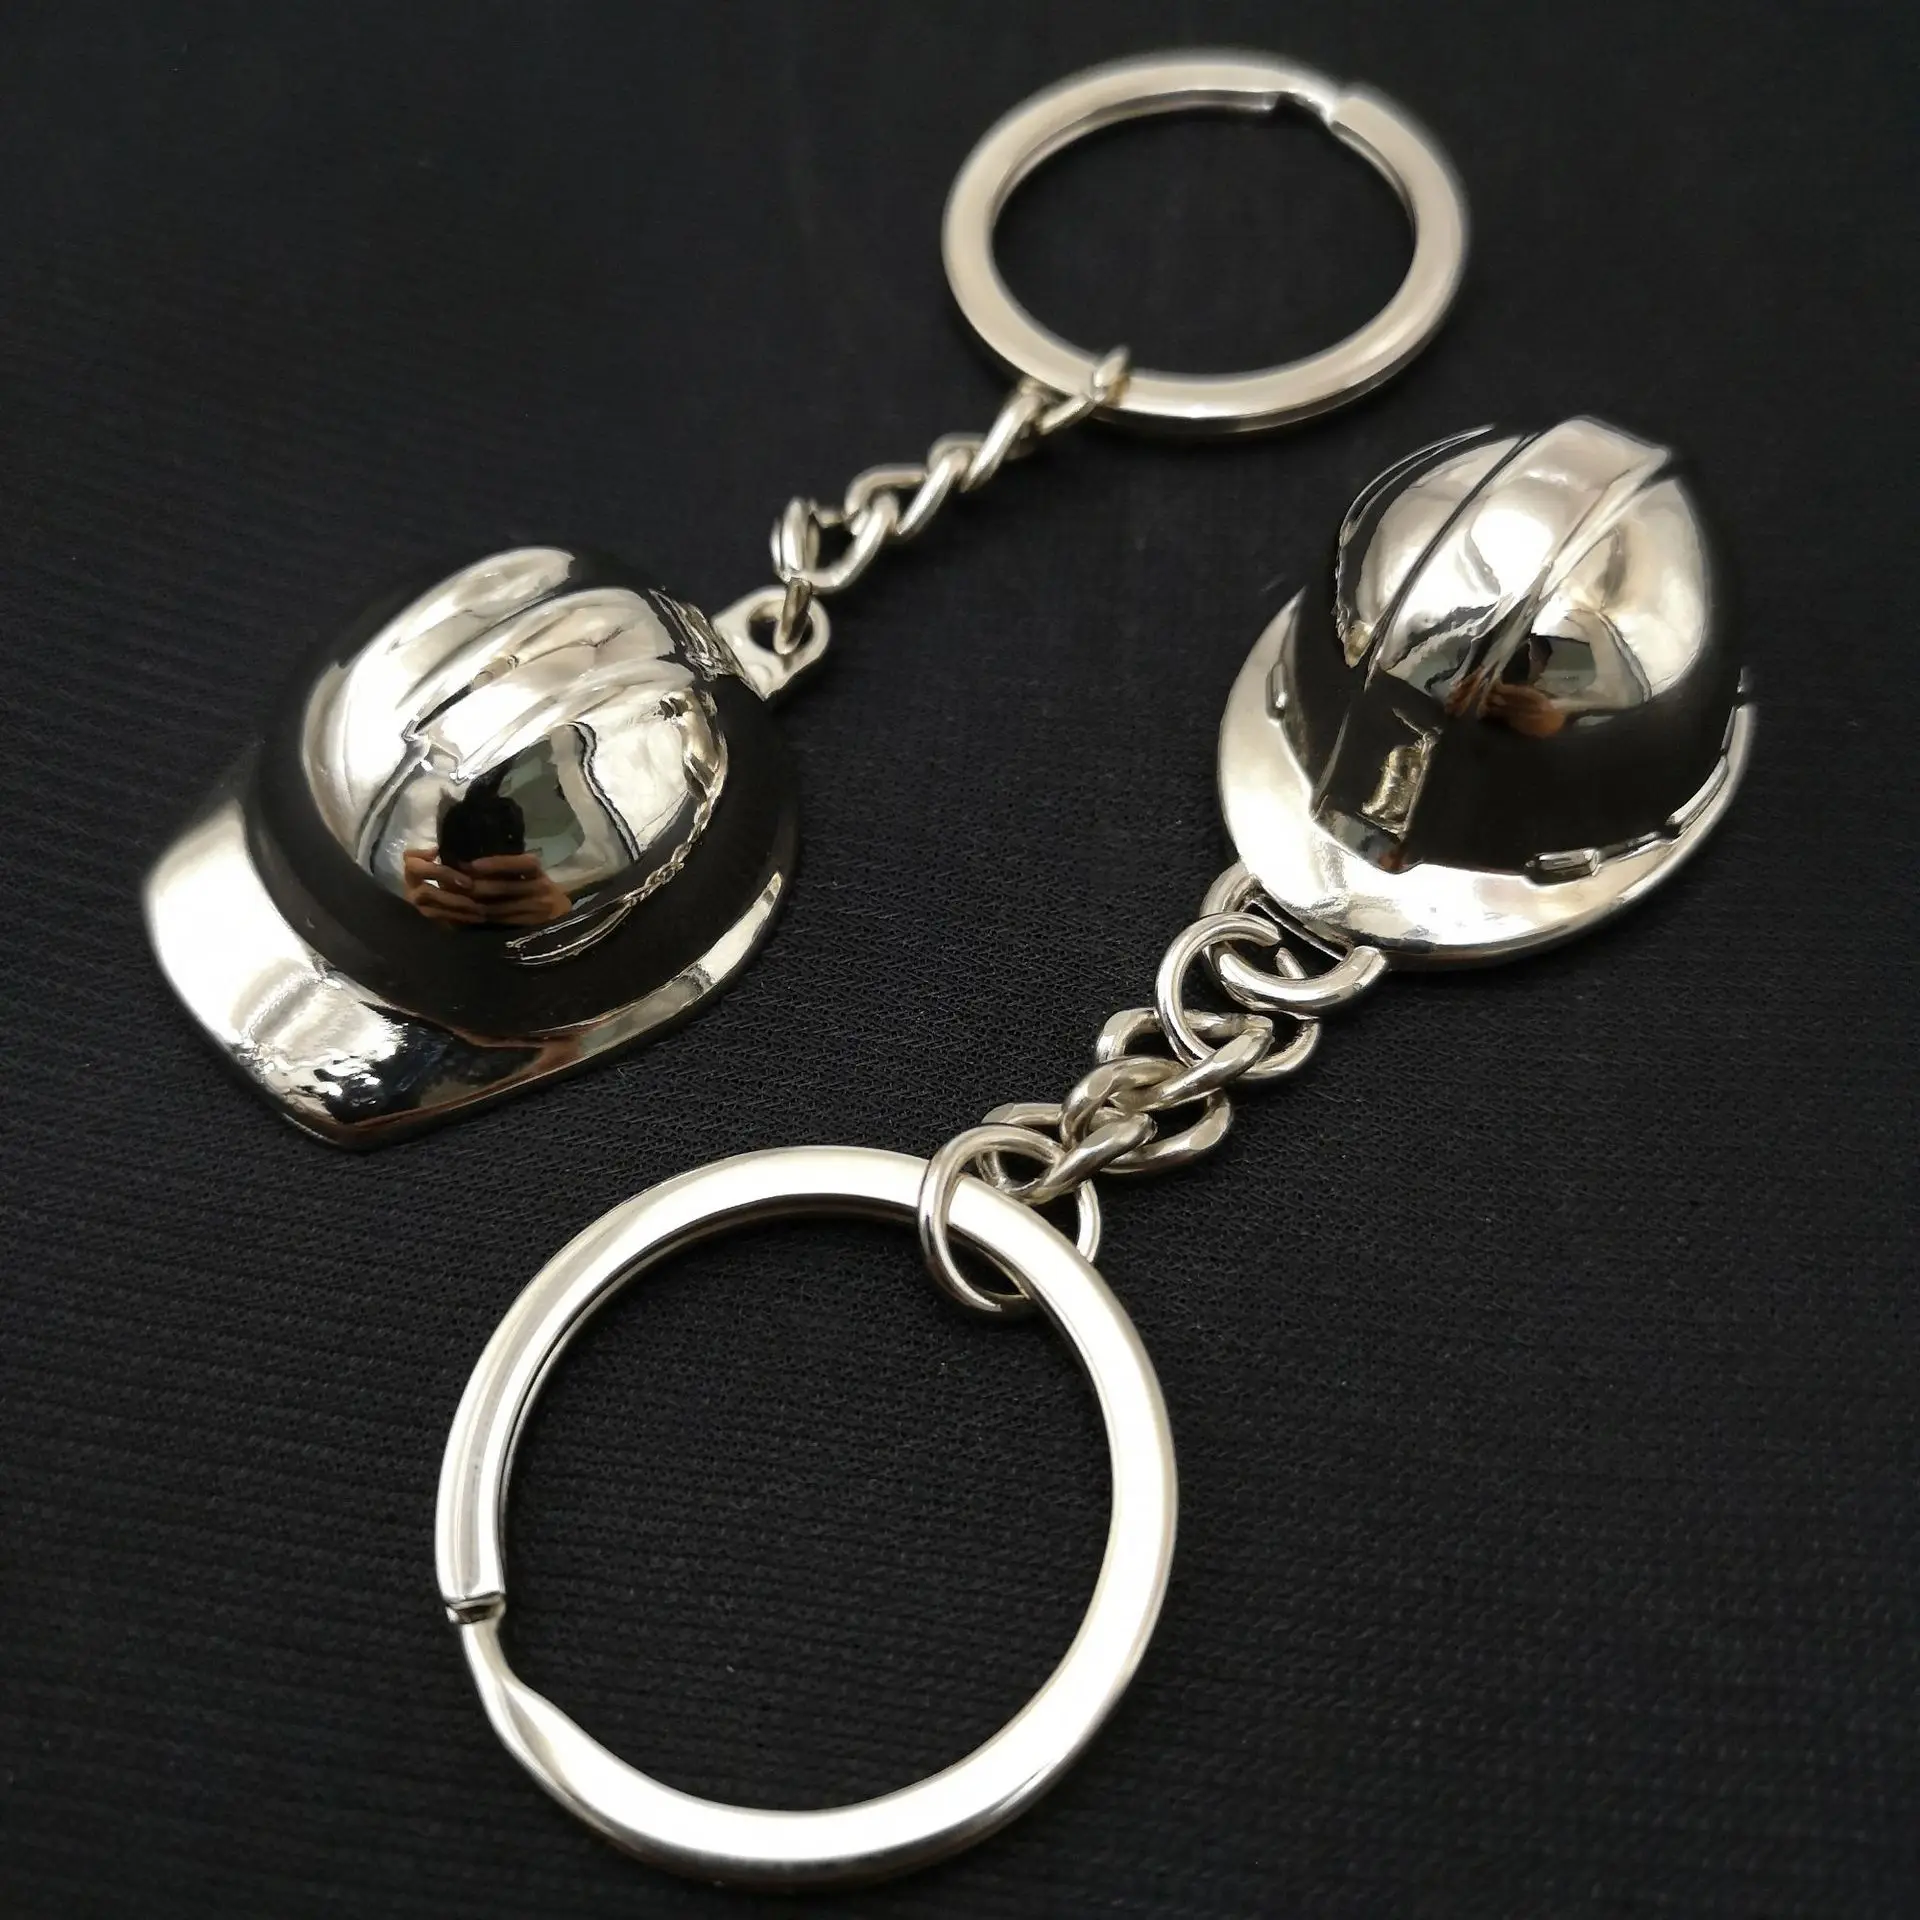 https://ae01.alicdn.com/kf/Hf2e5b2c673524799bb7bfaf60b430b003/Construction-helmet-keychain-modern-keychain-key-ring-jewelry-accessories-for-men-or-women-gift-2021-car.jpg